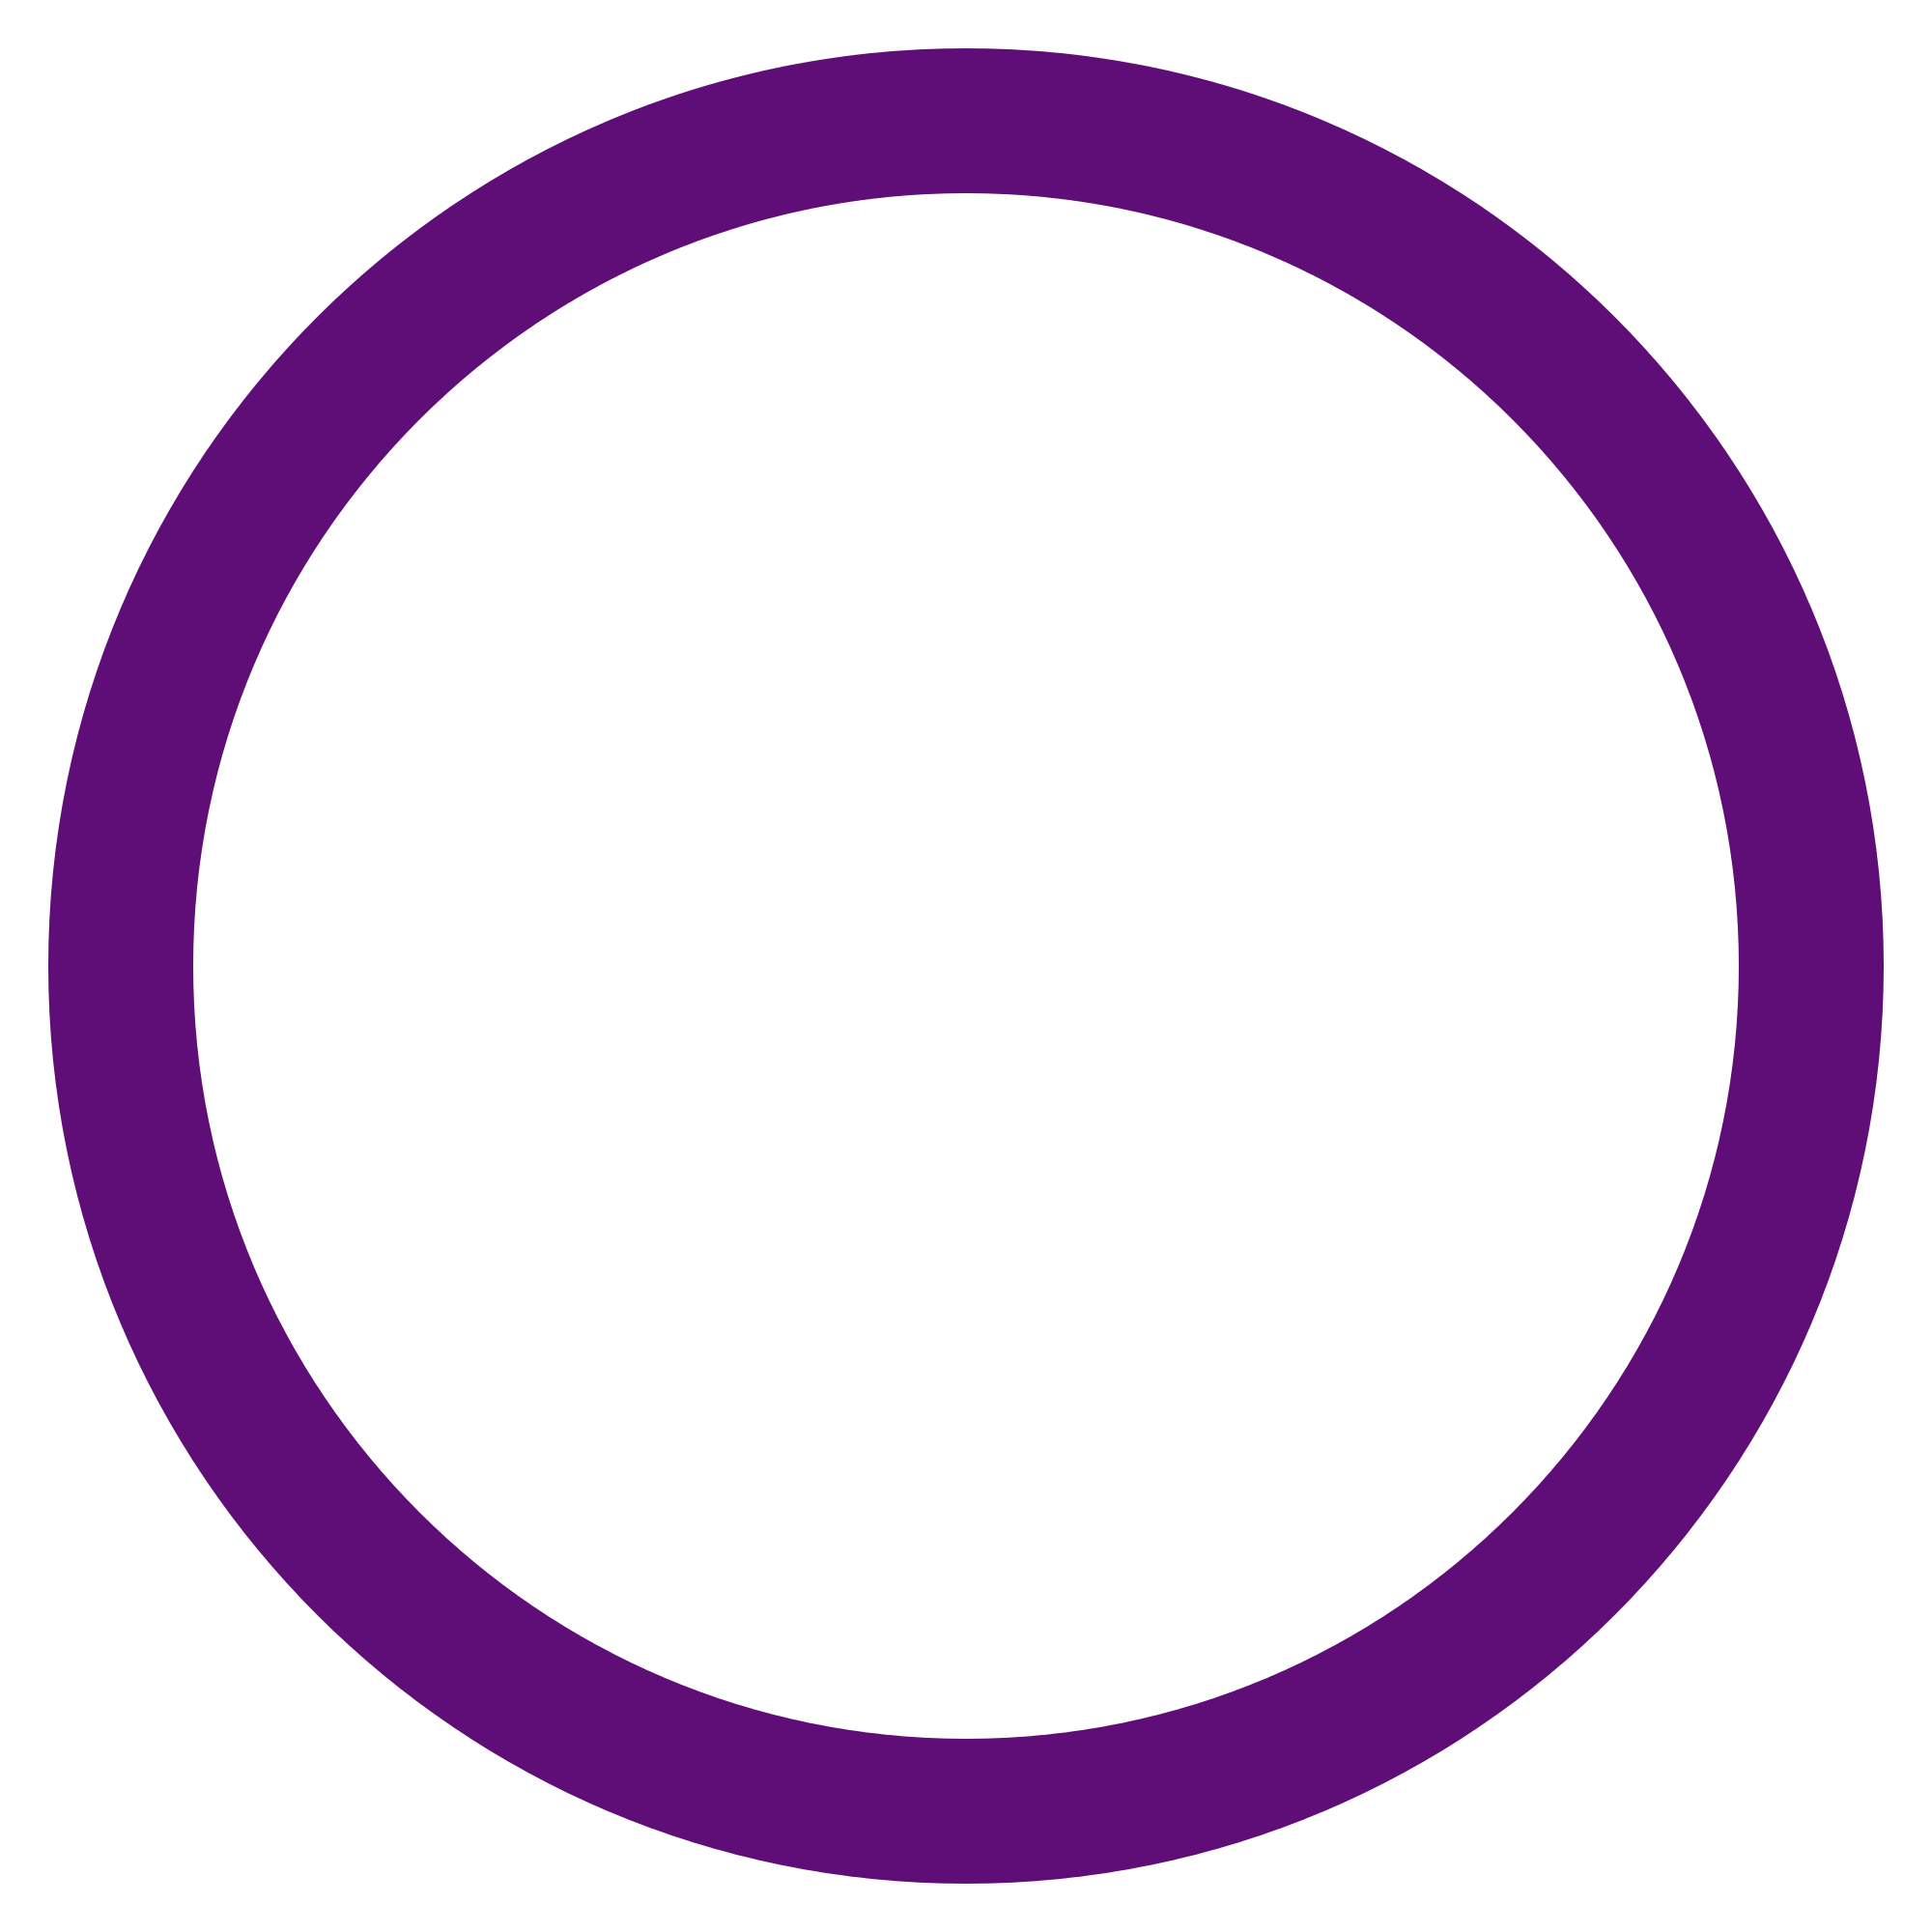 Circle clipart circle shape, Circle circle shape Transparent FREE for